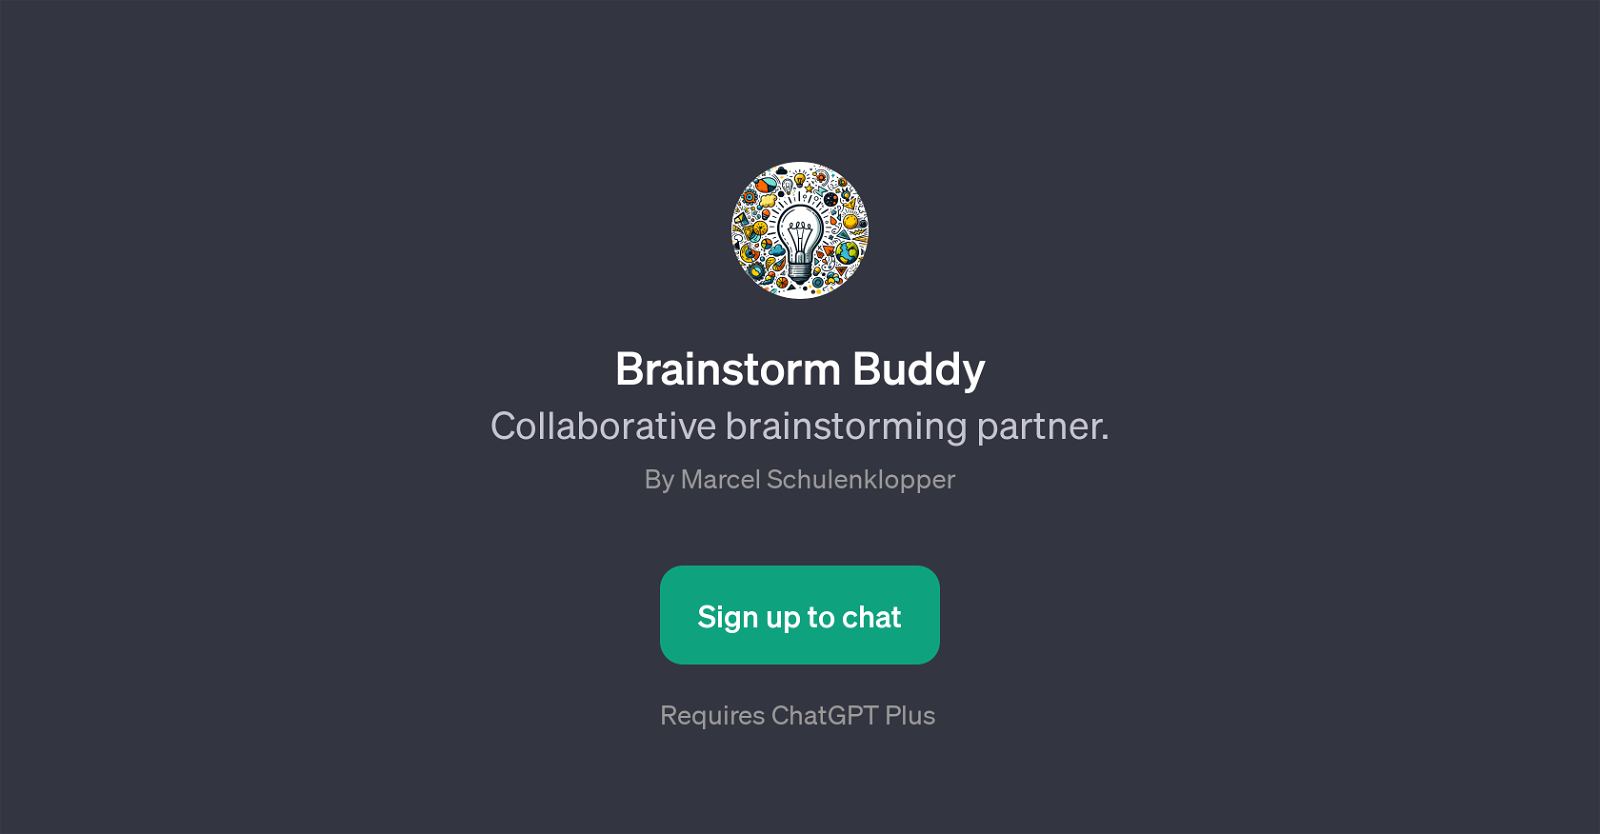 Brainstorm Buddy website